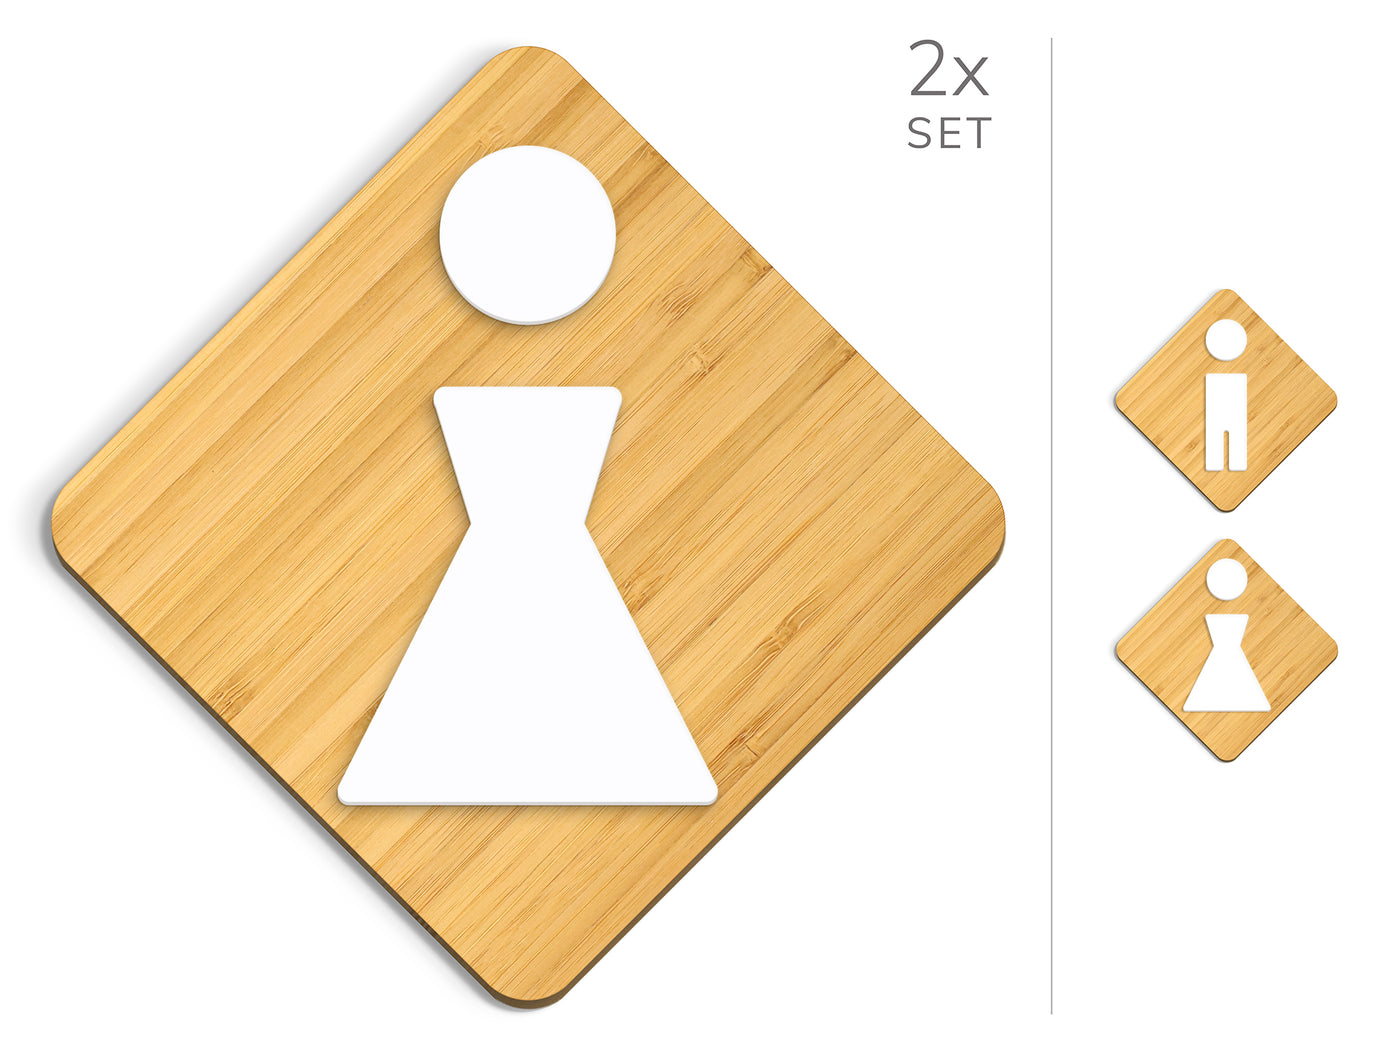 Polygonal, 2x Rhombus Base - Restroom Signs Set - Man, Woman